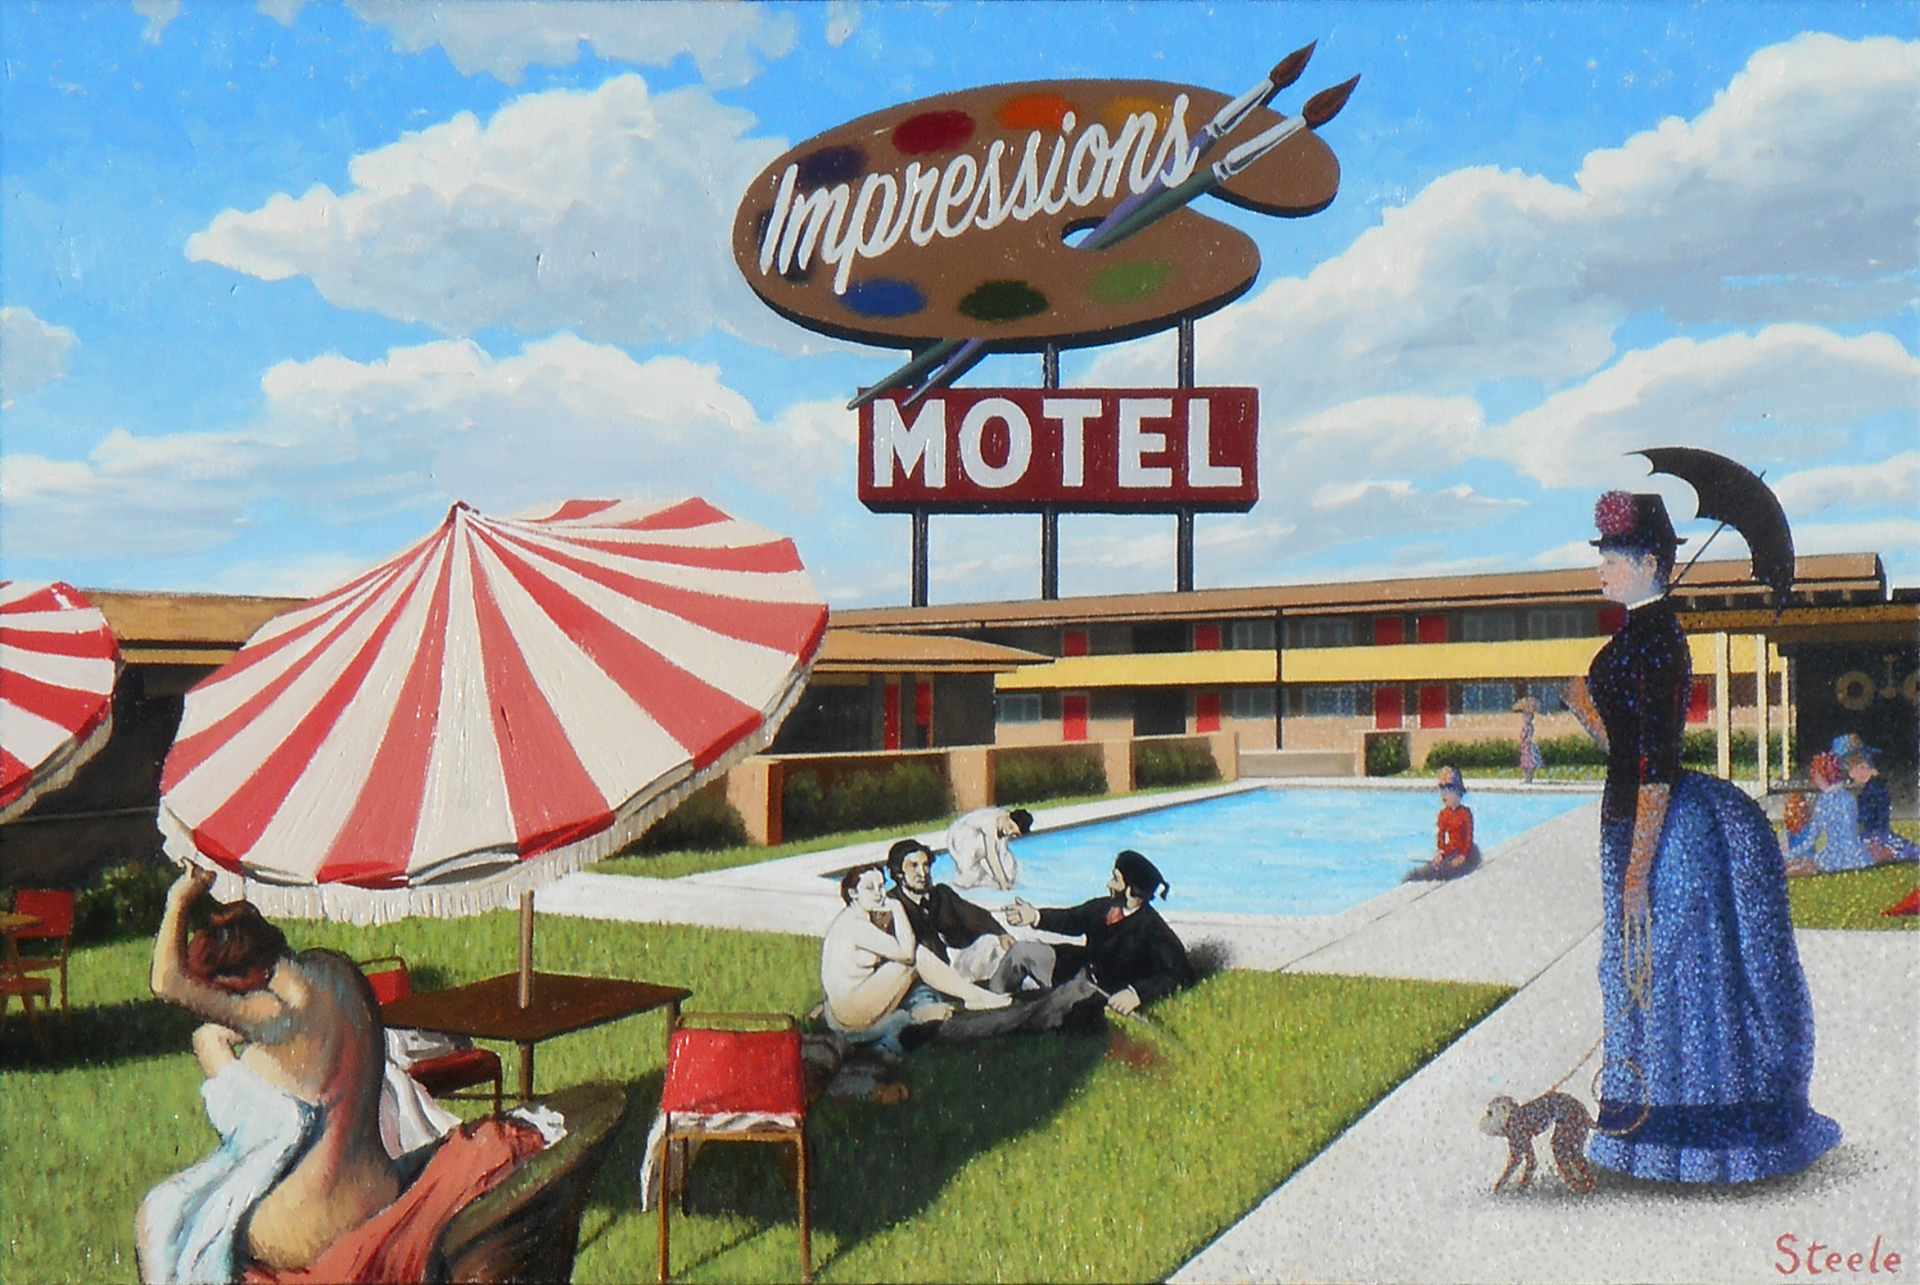 Impressions Motel by Ben Steele